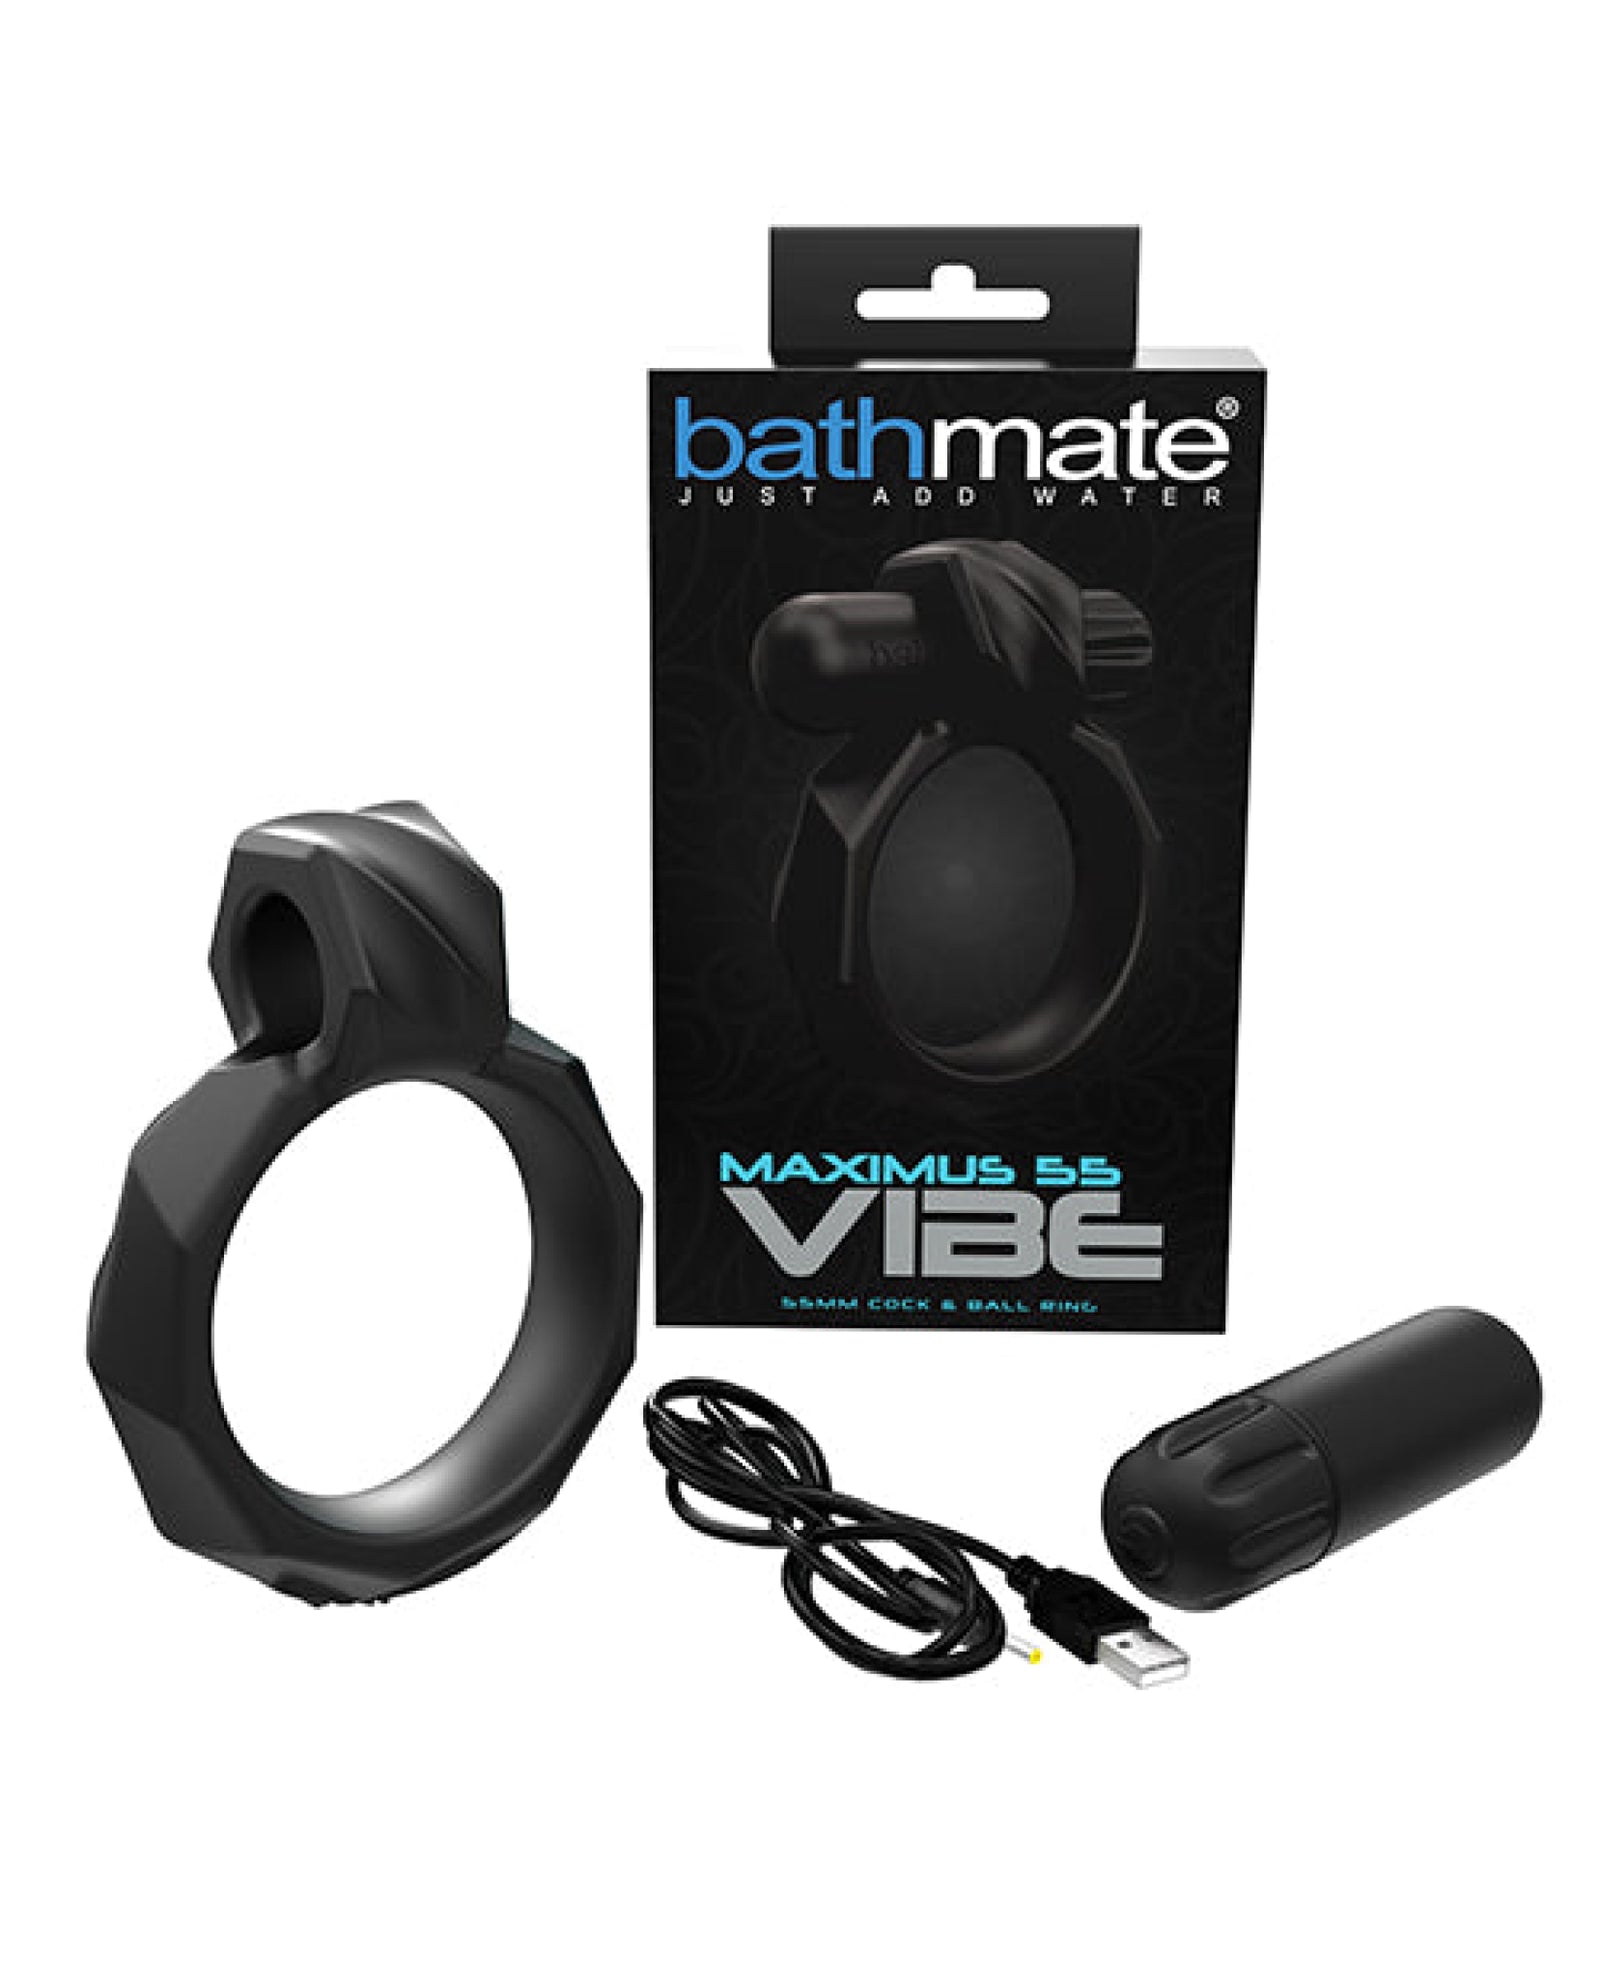 Bathmate Maximus Vibe 55 Cock Ring - Black Bathmate®